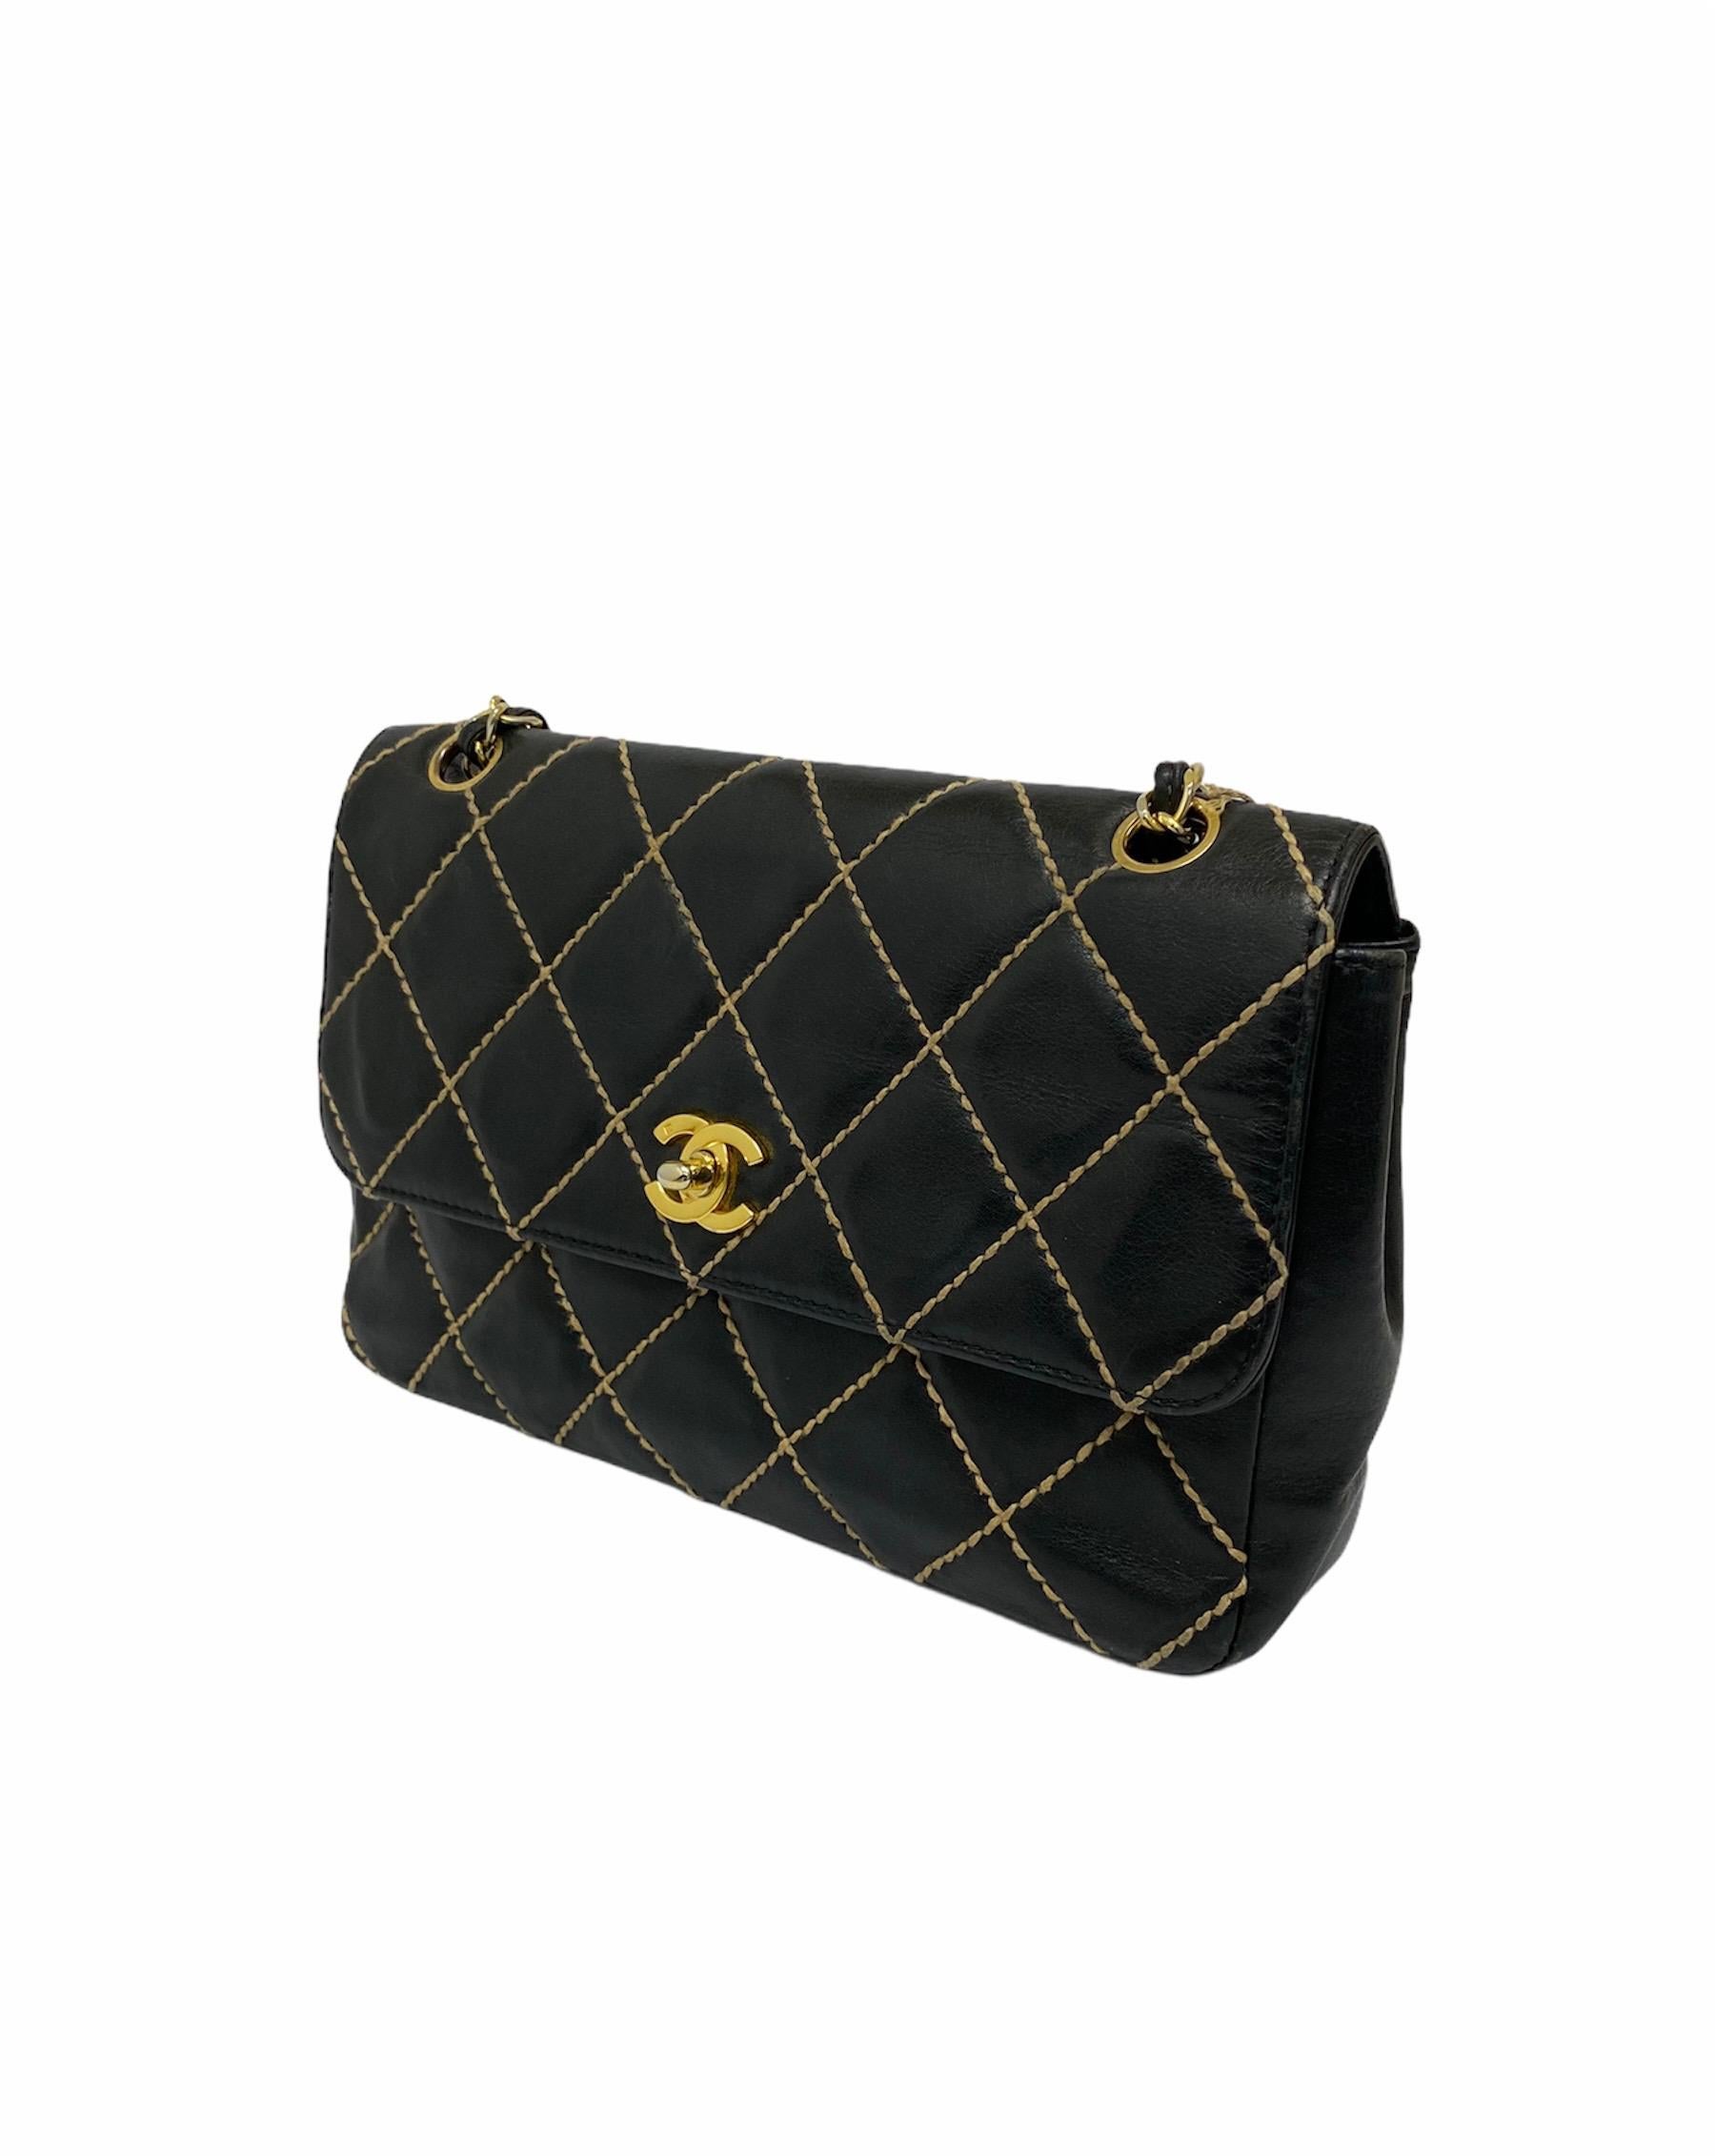 Women's Chanel Black Leather Bag